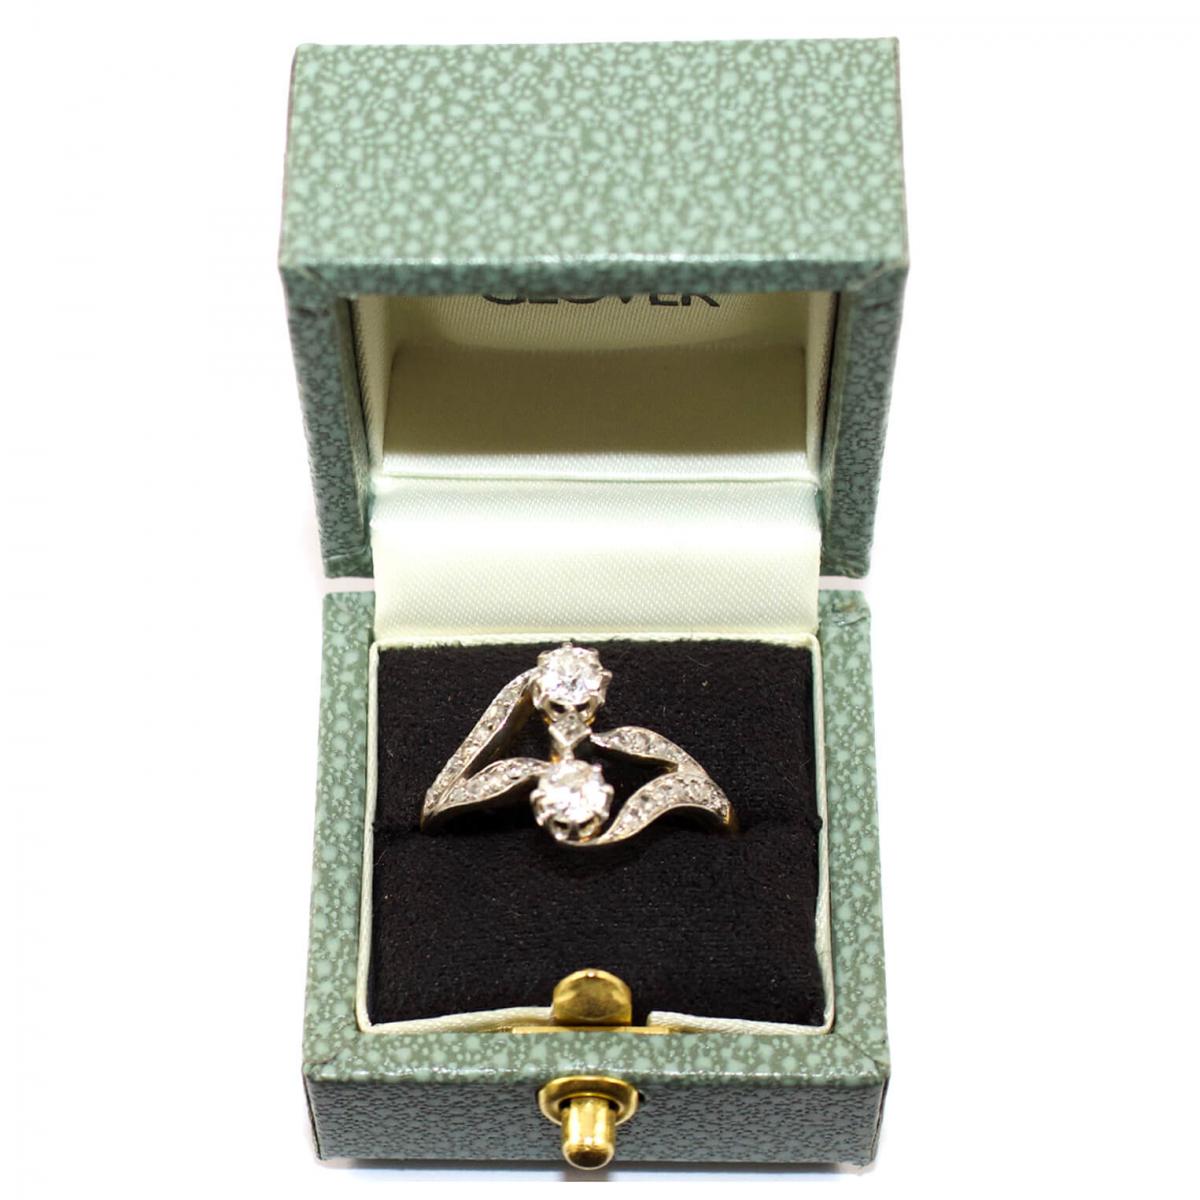 Art Nouveau Diamond Ring - French c.1910